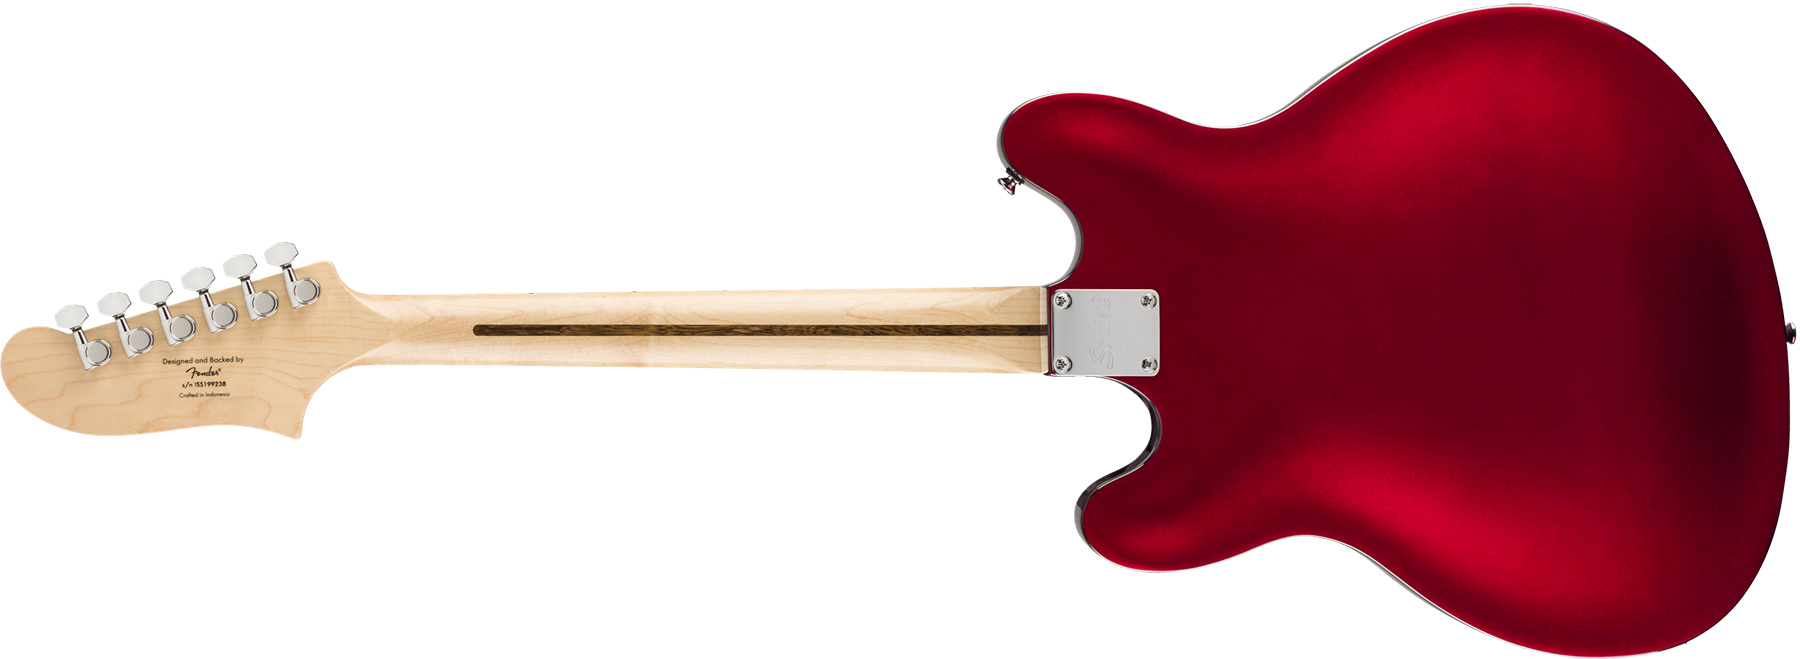 Squier Starcaster Affinity 2019 Hh Ht Mn - Candy Apple Red - Semi hollow elektriche gitaar - Variation 1